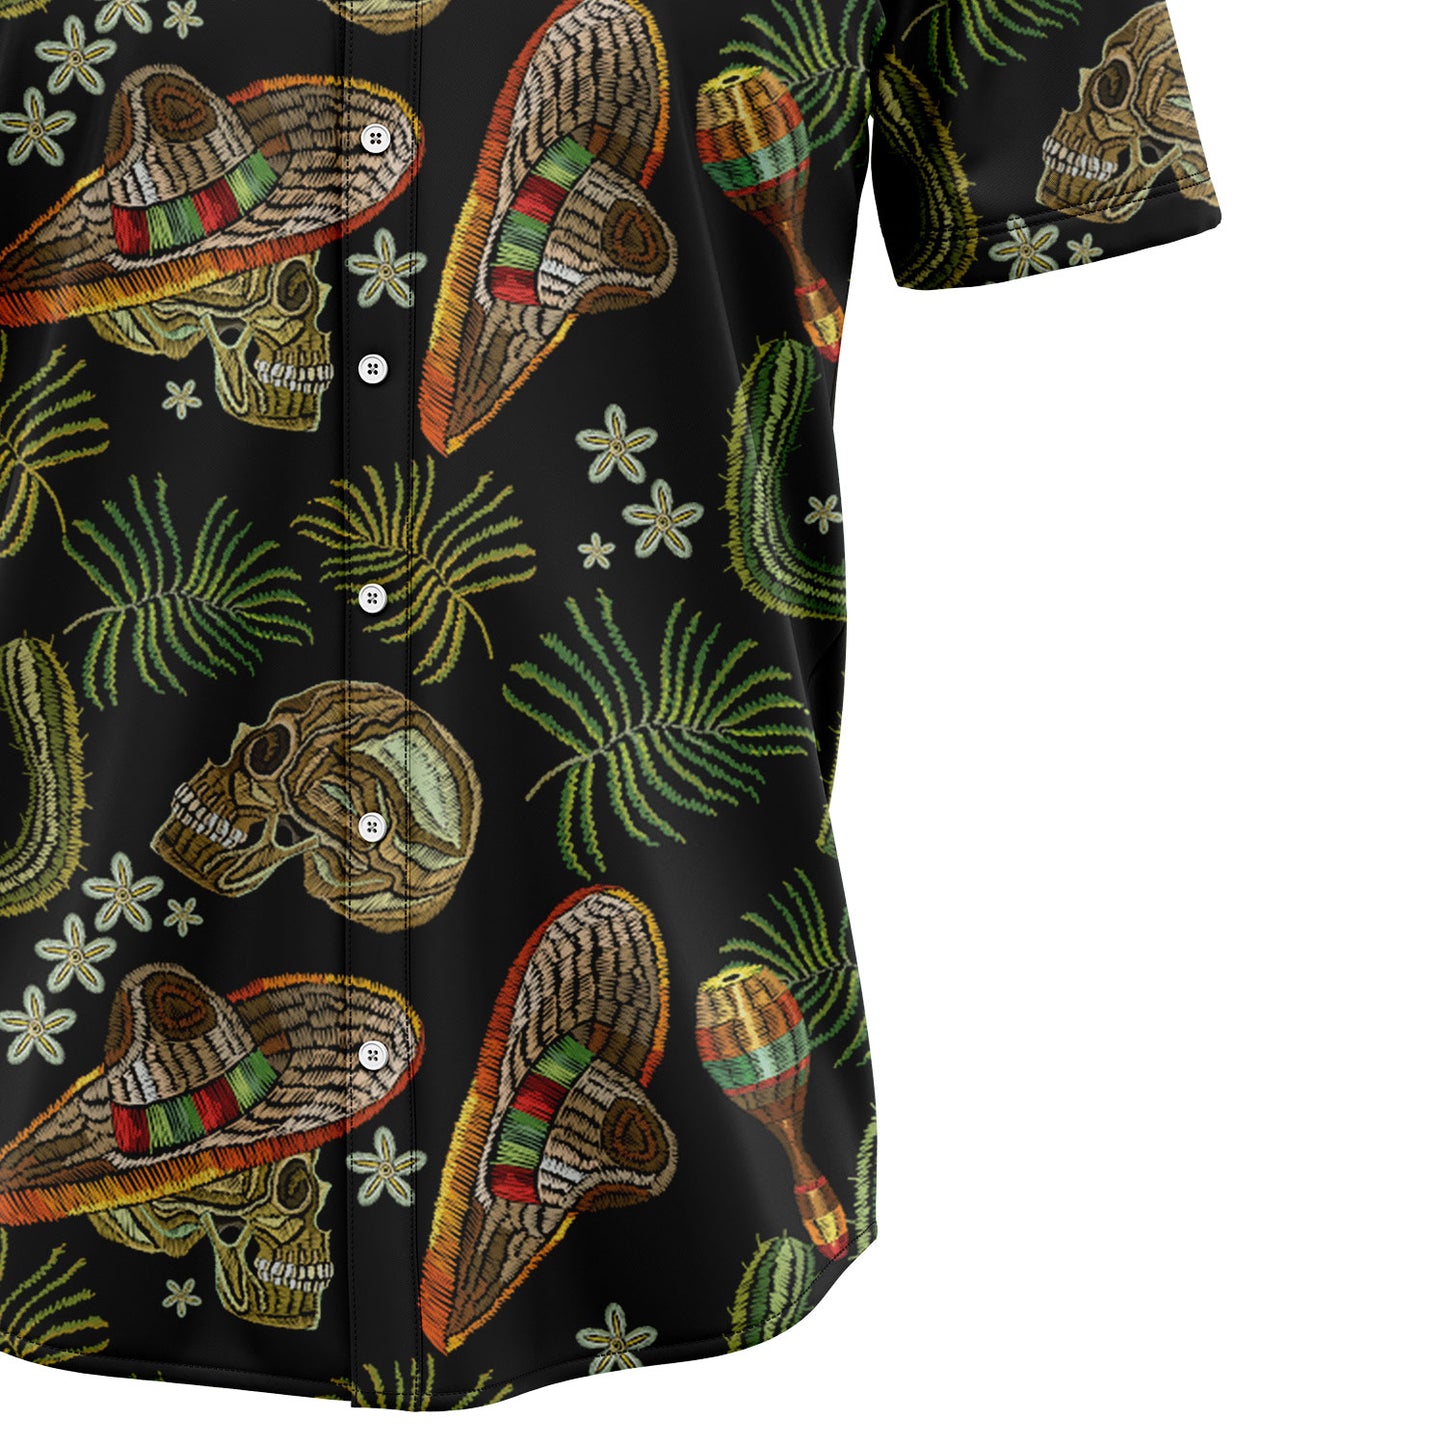 Skull Love Cactus TG5717 Hawaiian Shirt